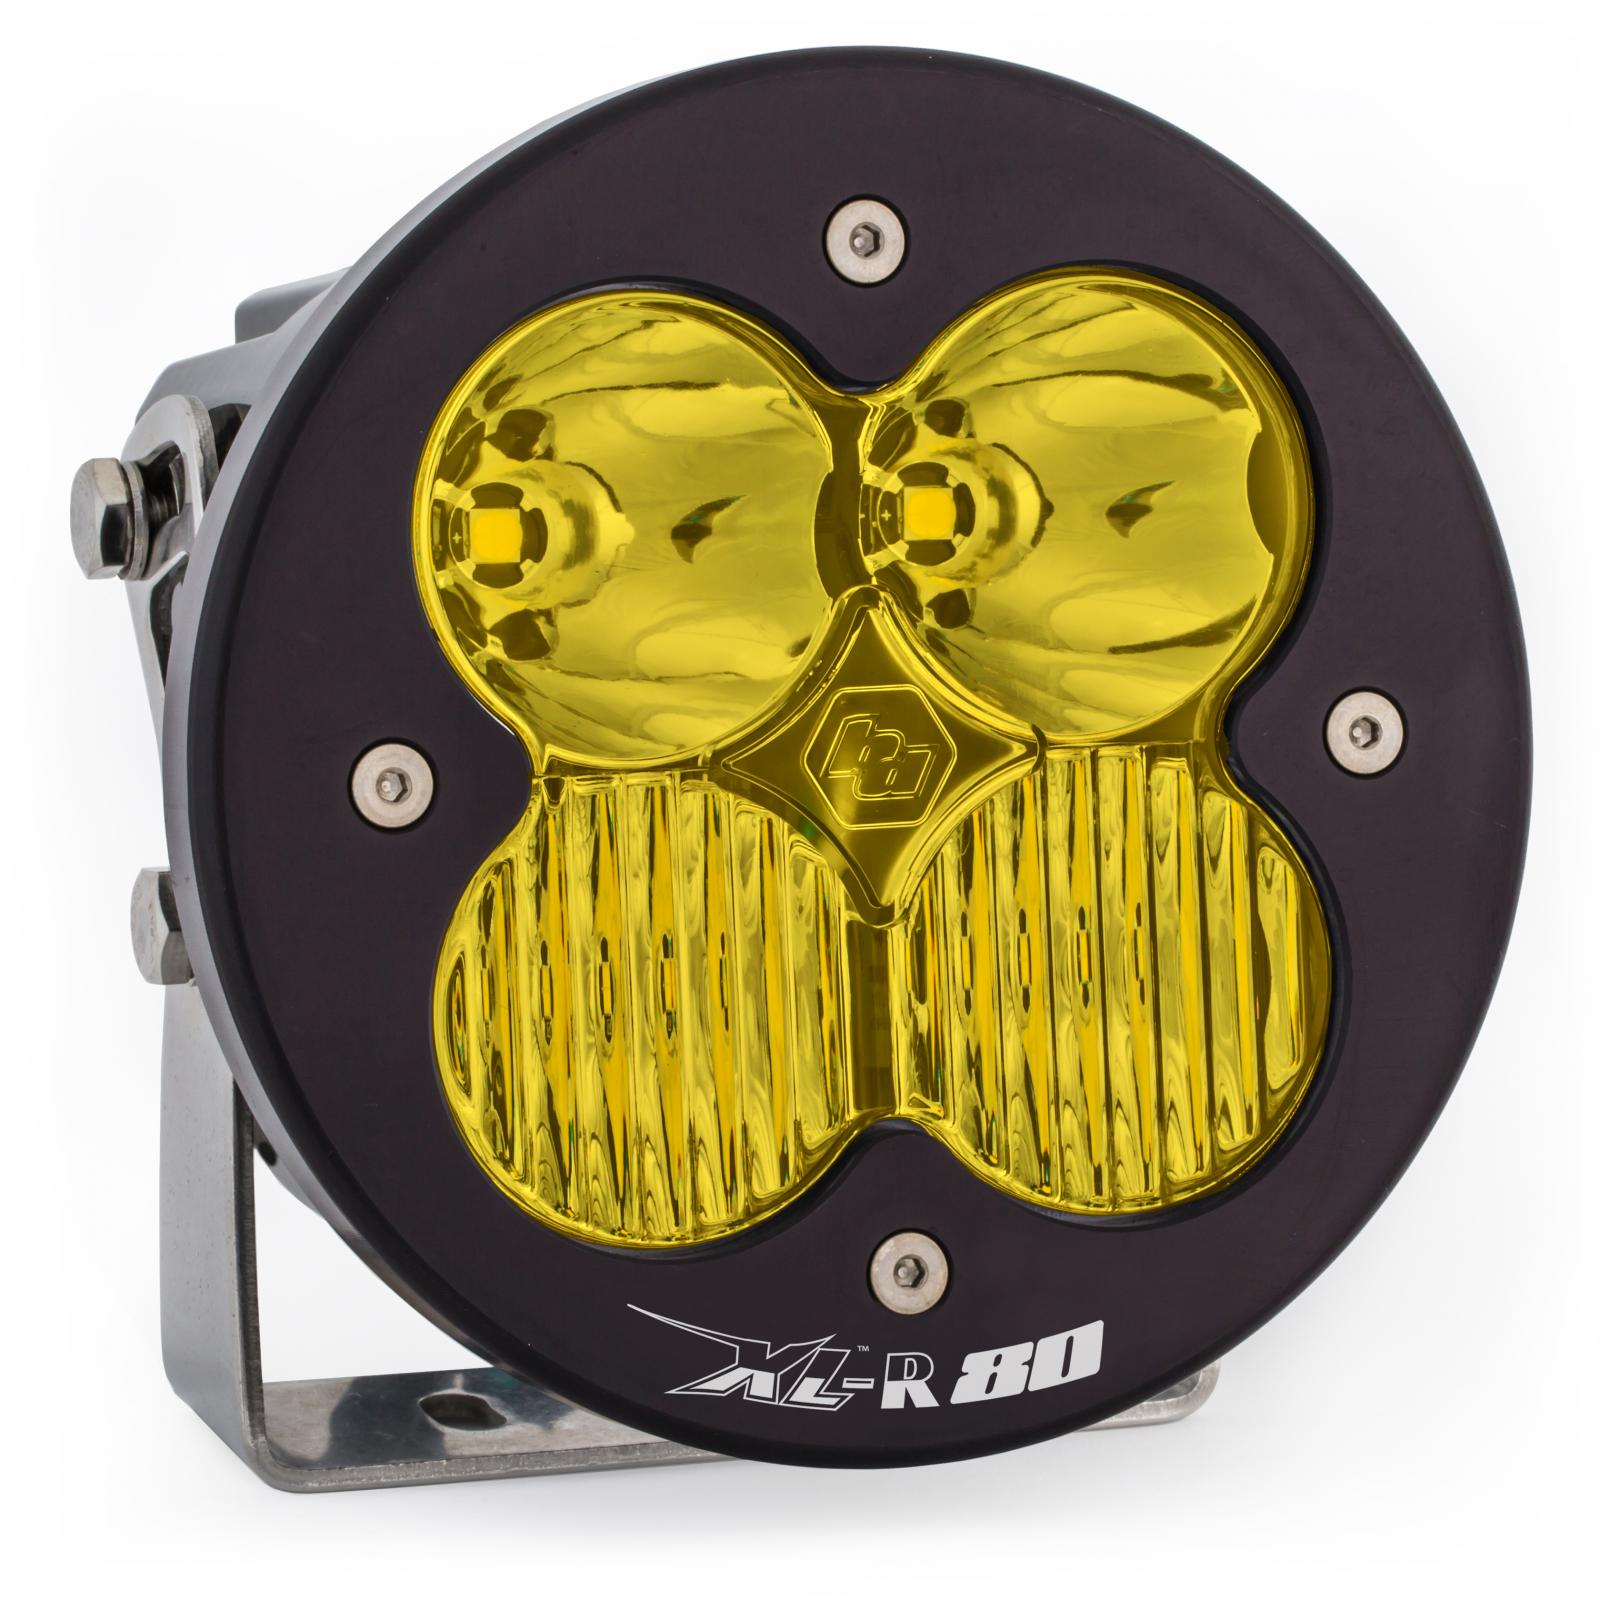 Baja Designs LED Light Pods Amber Lens Spot Each XL R 80 Driving/Combo - Click Image to Close